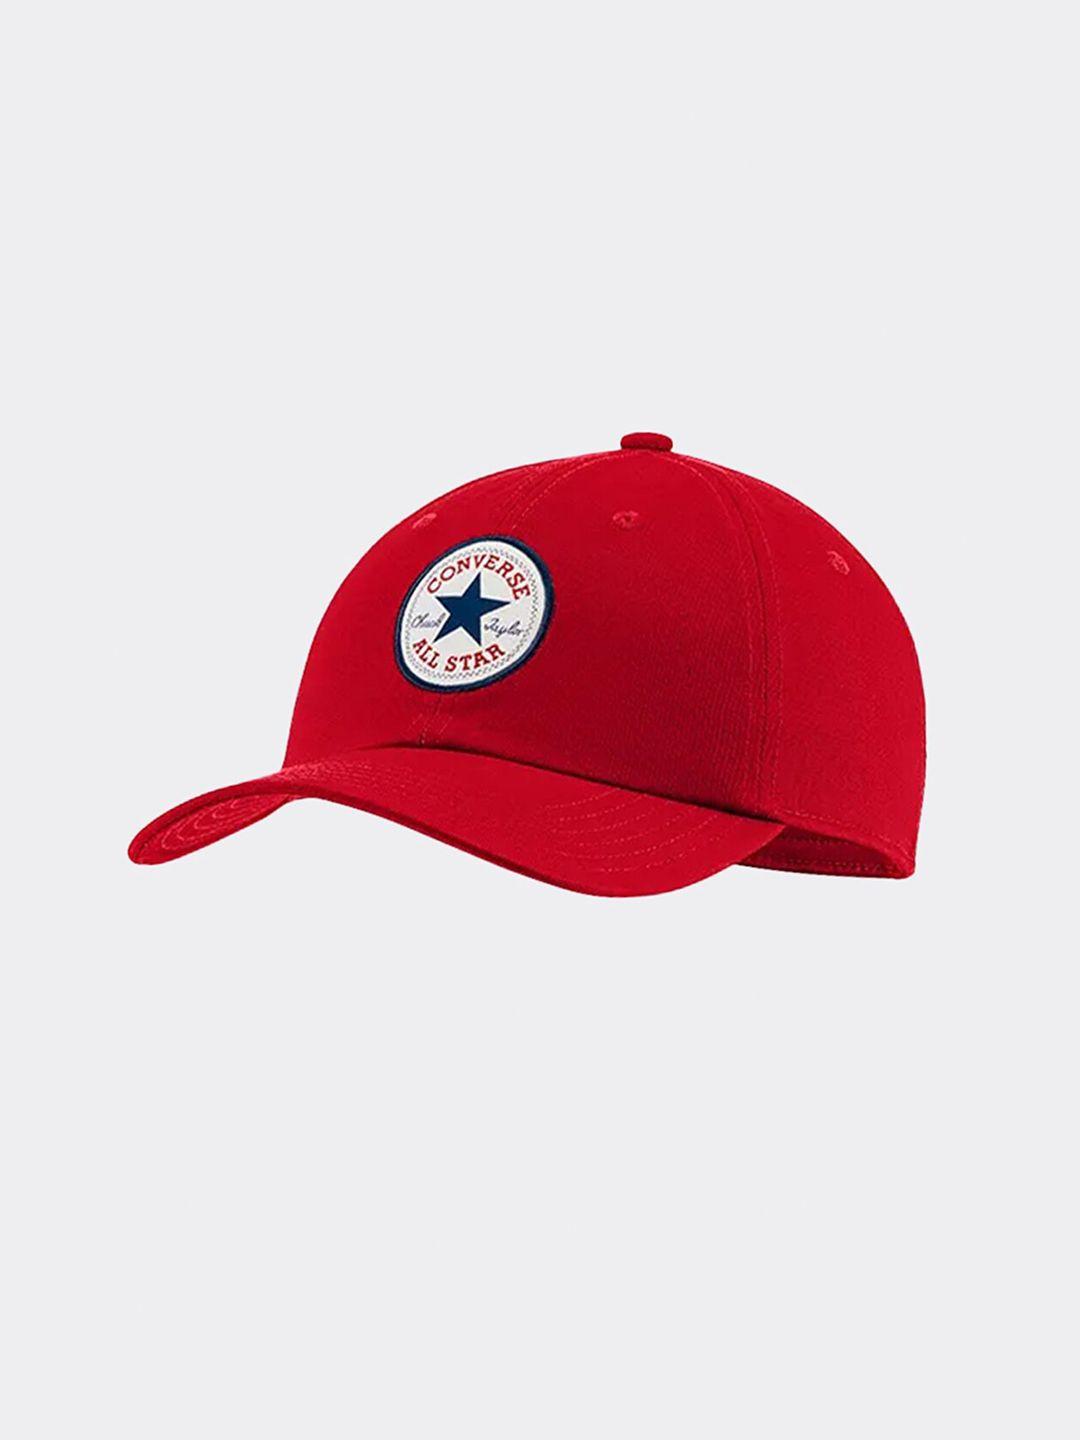 converse unisex chuck taylor all star patch baseball hat